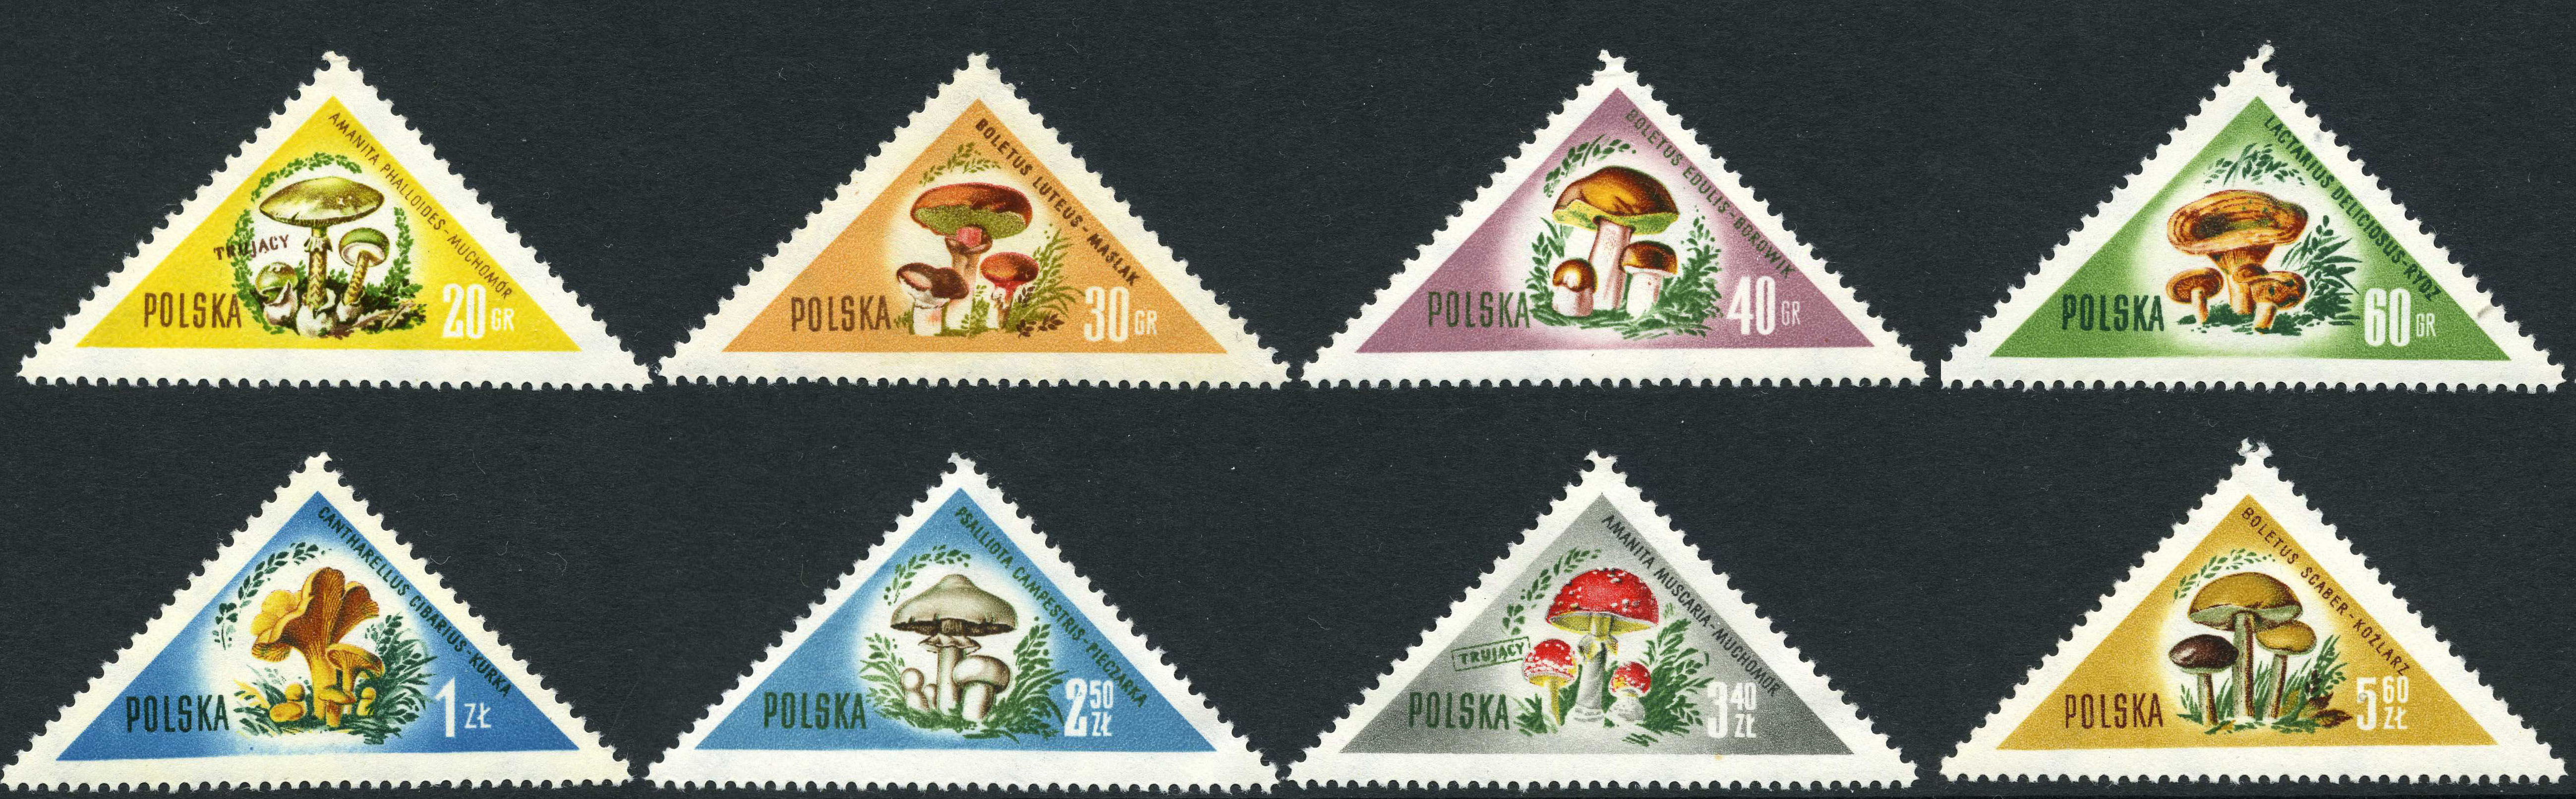 postage stamp design - poland 1959 triangle stamps